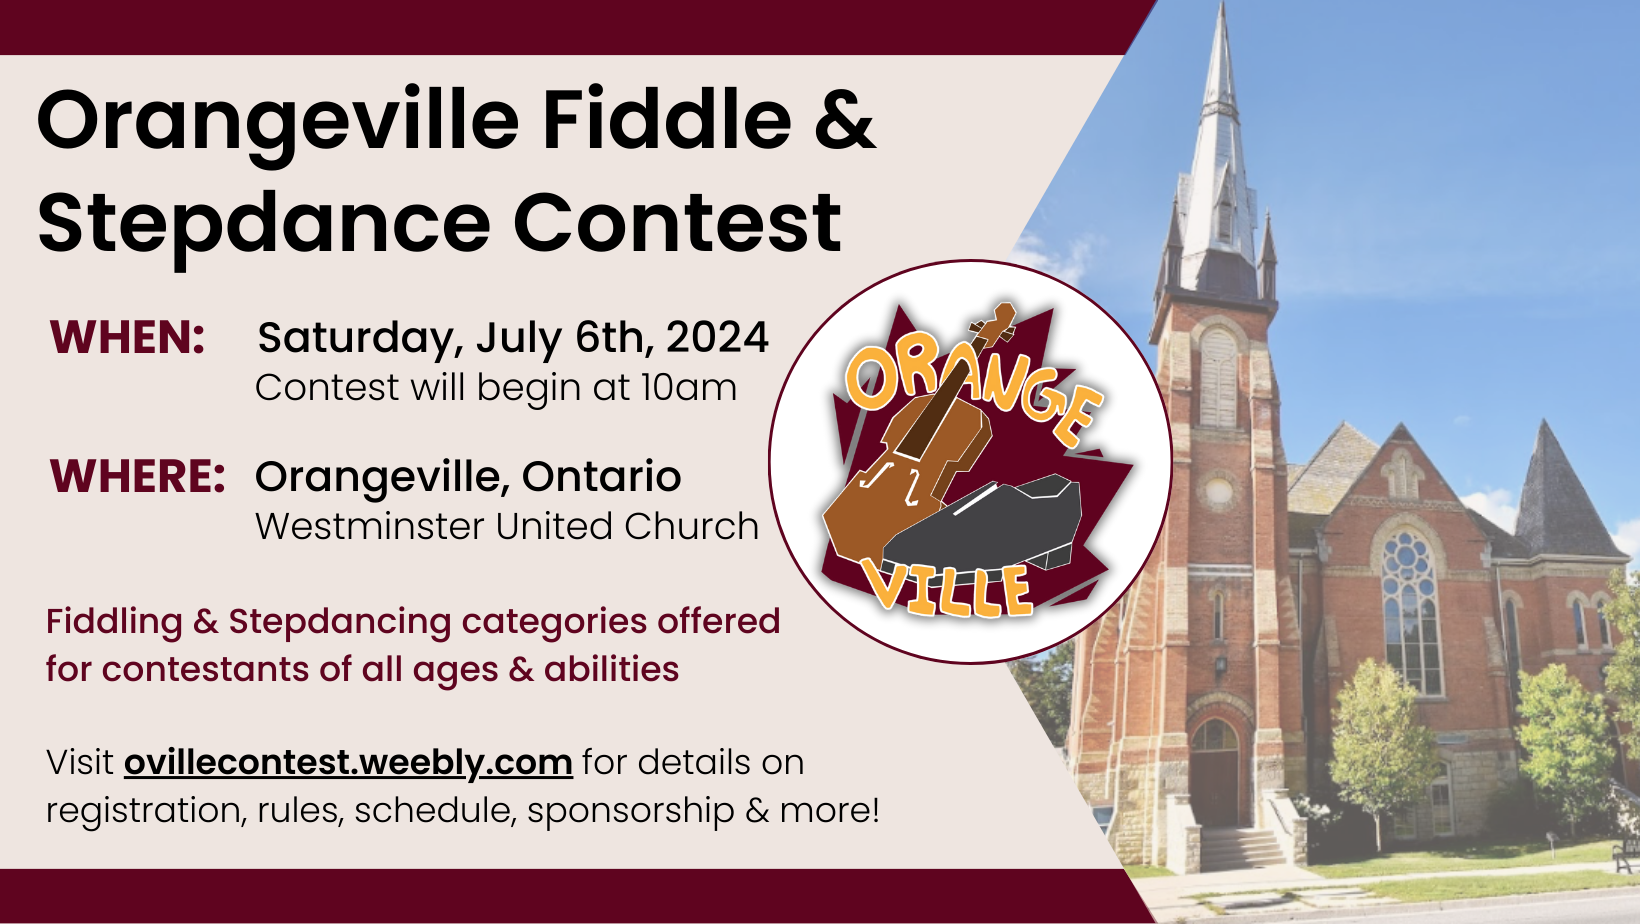 Orangeville stepdance and fiddle contest ad